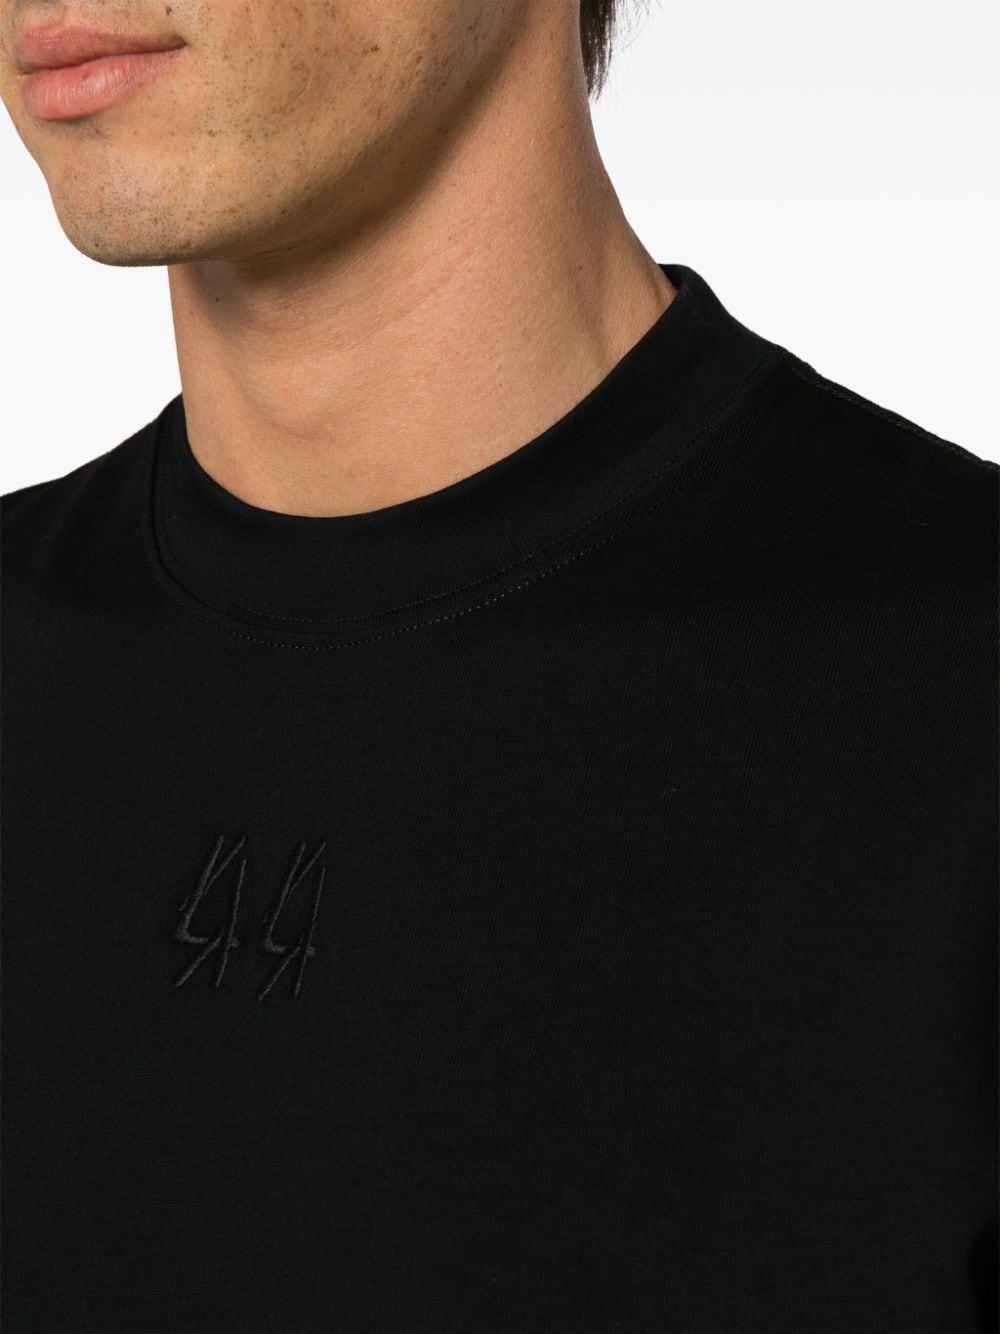 T-shirt noir avec logo blanc